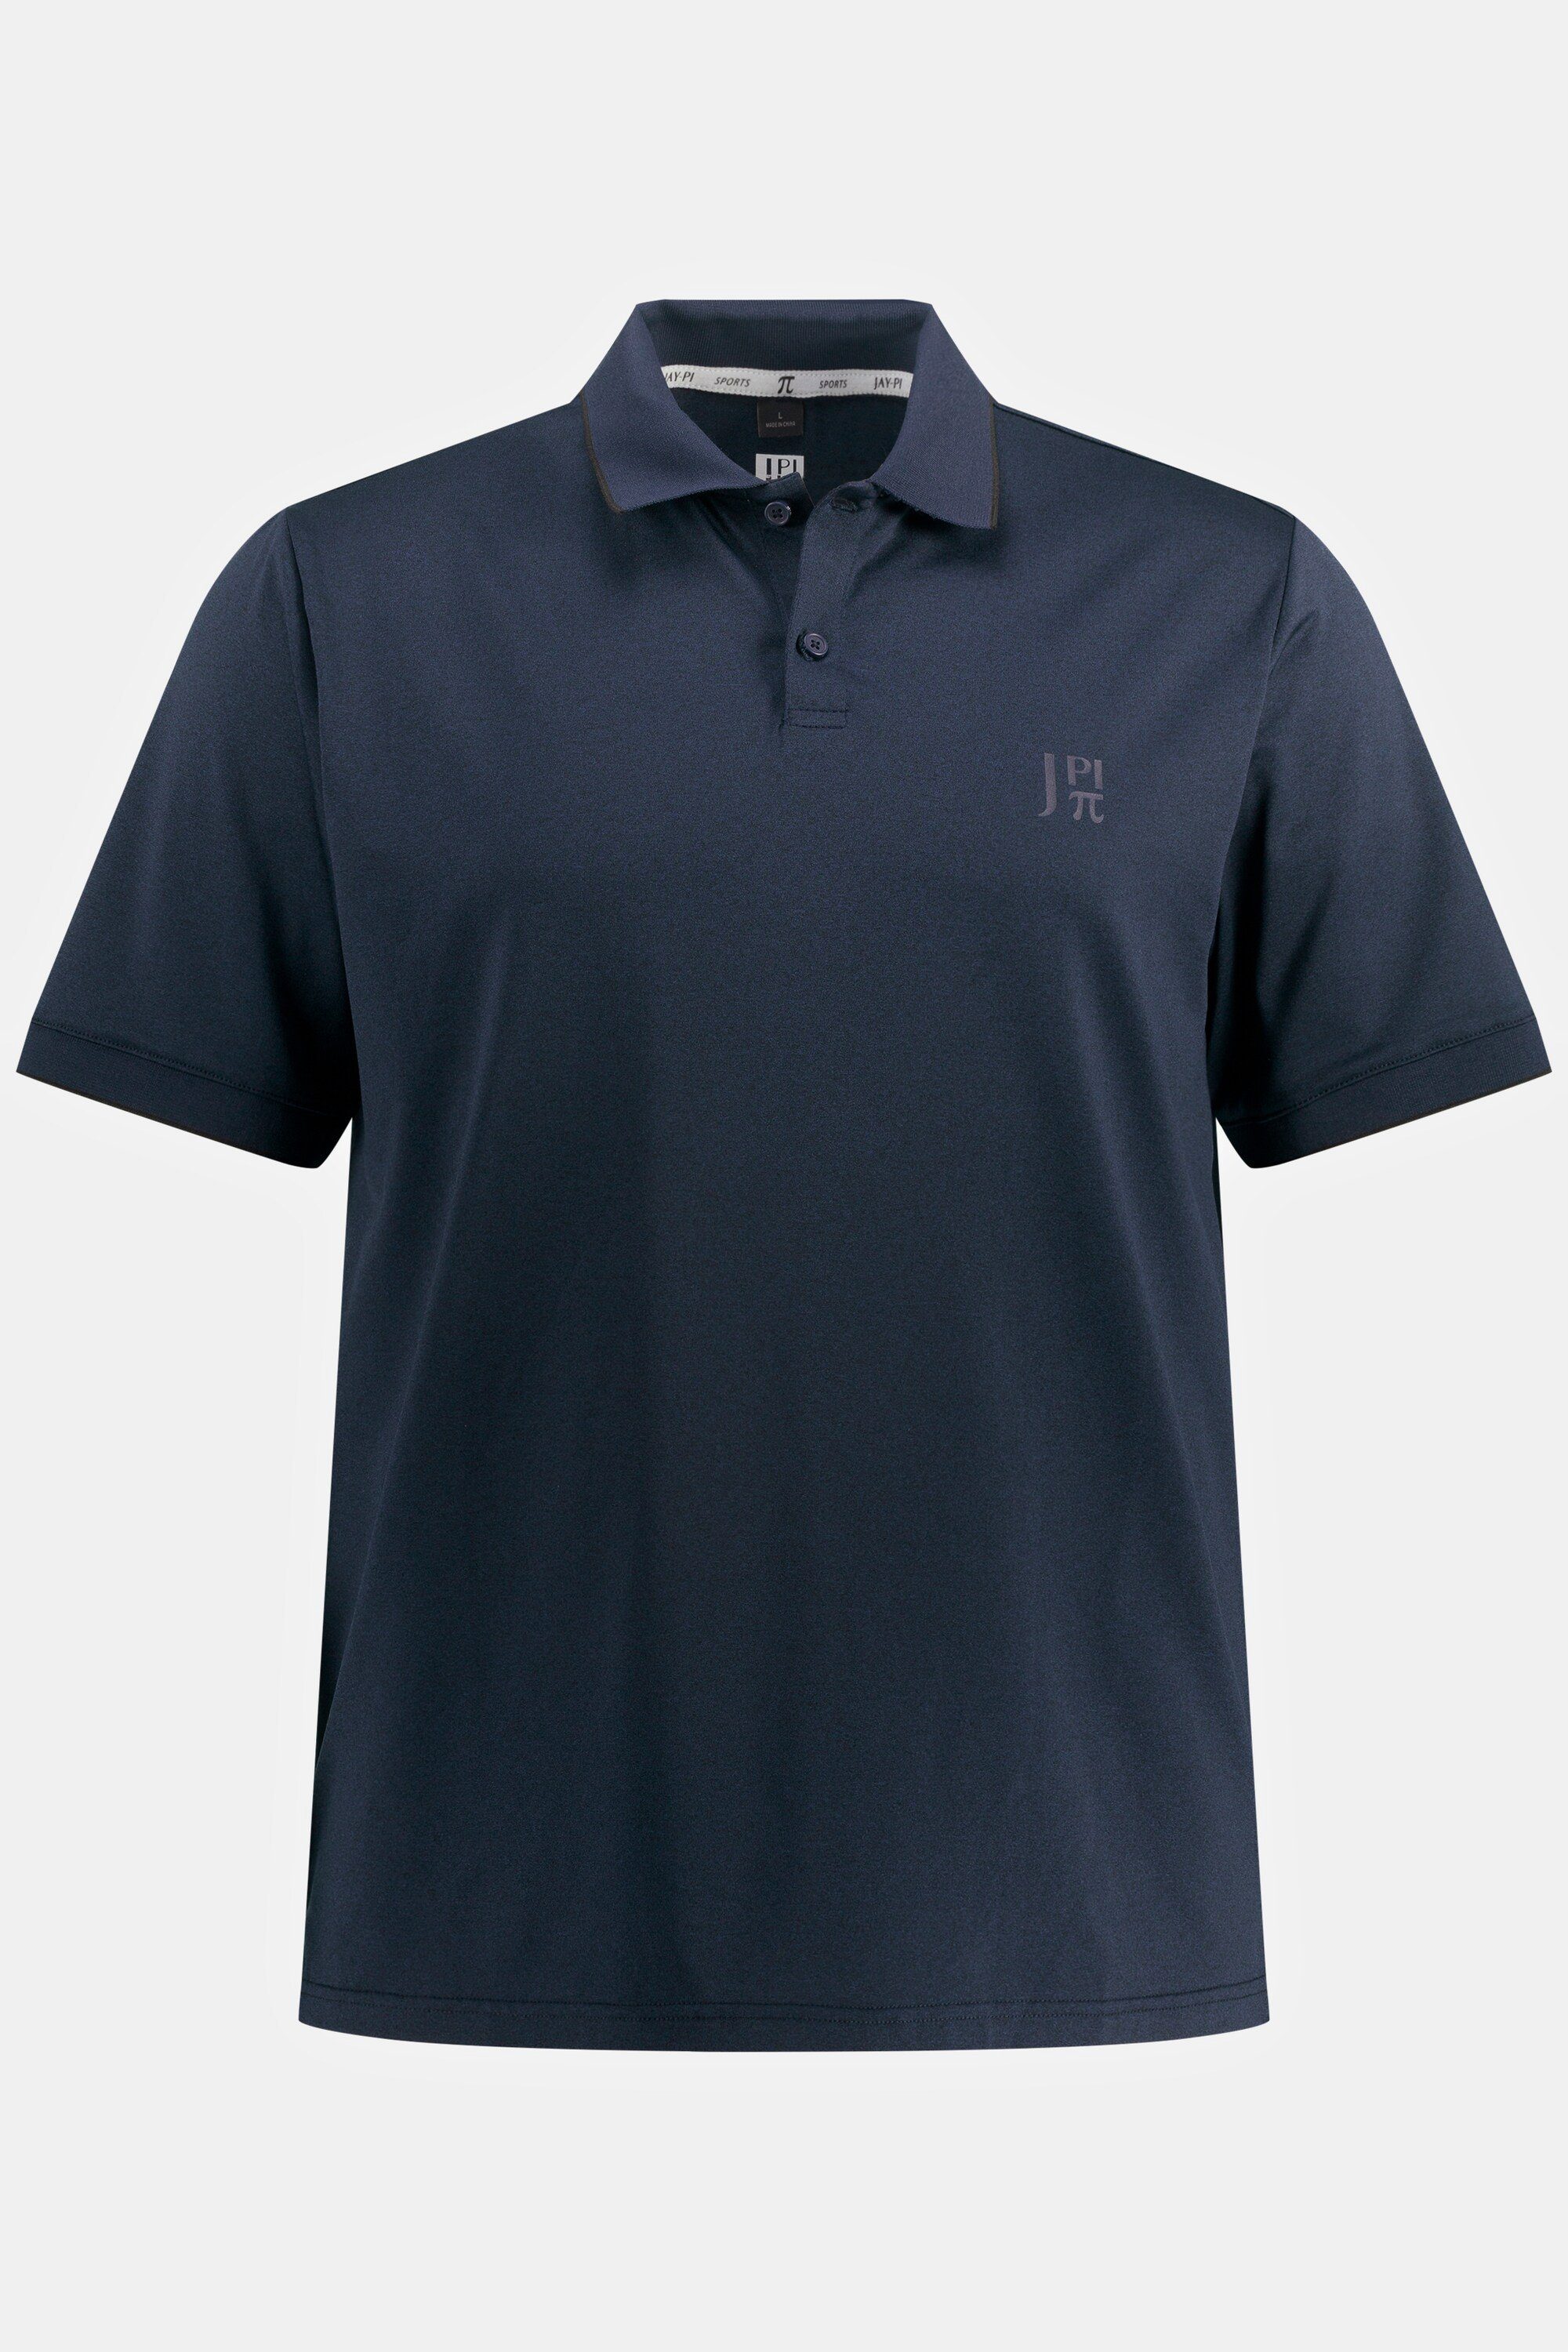 JP1880 Halbarm nachtblau QuickDry Poloshirt Golf mattes Poloshirt